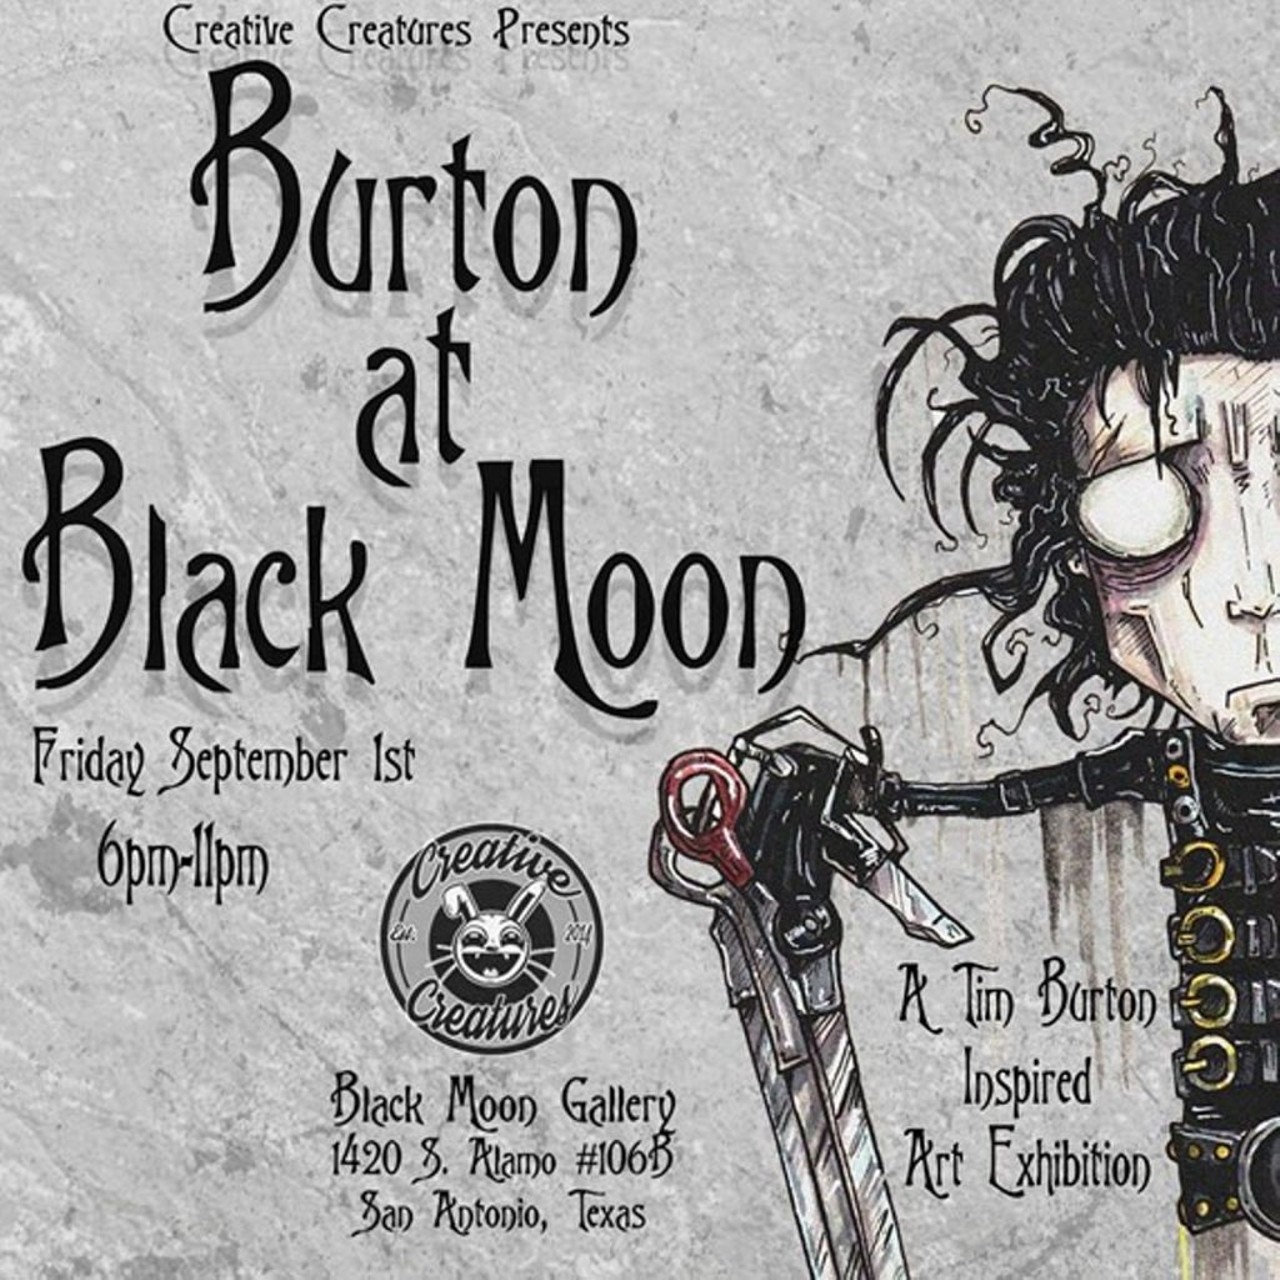  "Burton at Black Moon" 
Fri., Sept. 1, 6-11 p.m., Black Moon Gallery, 1420 S. Alamo St., #106B